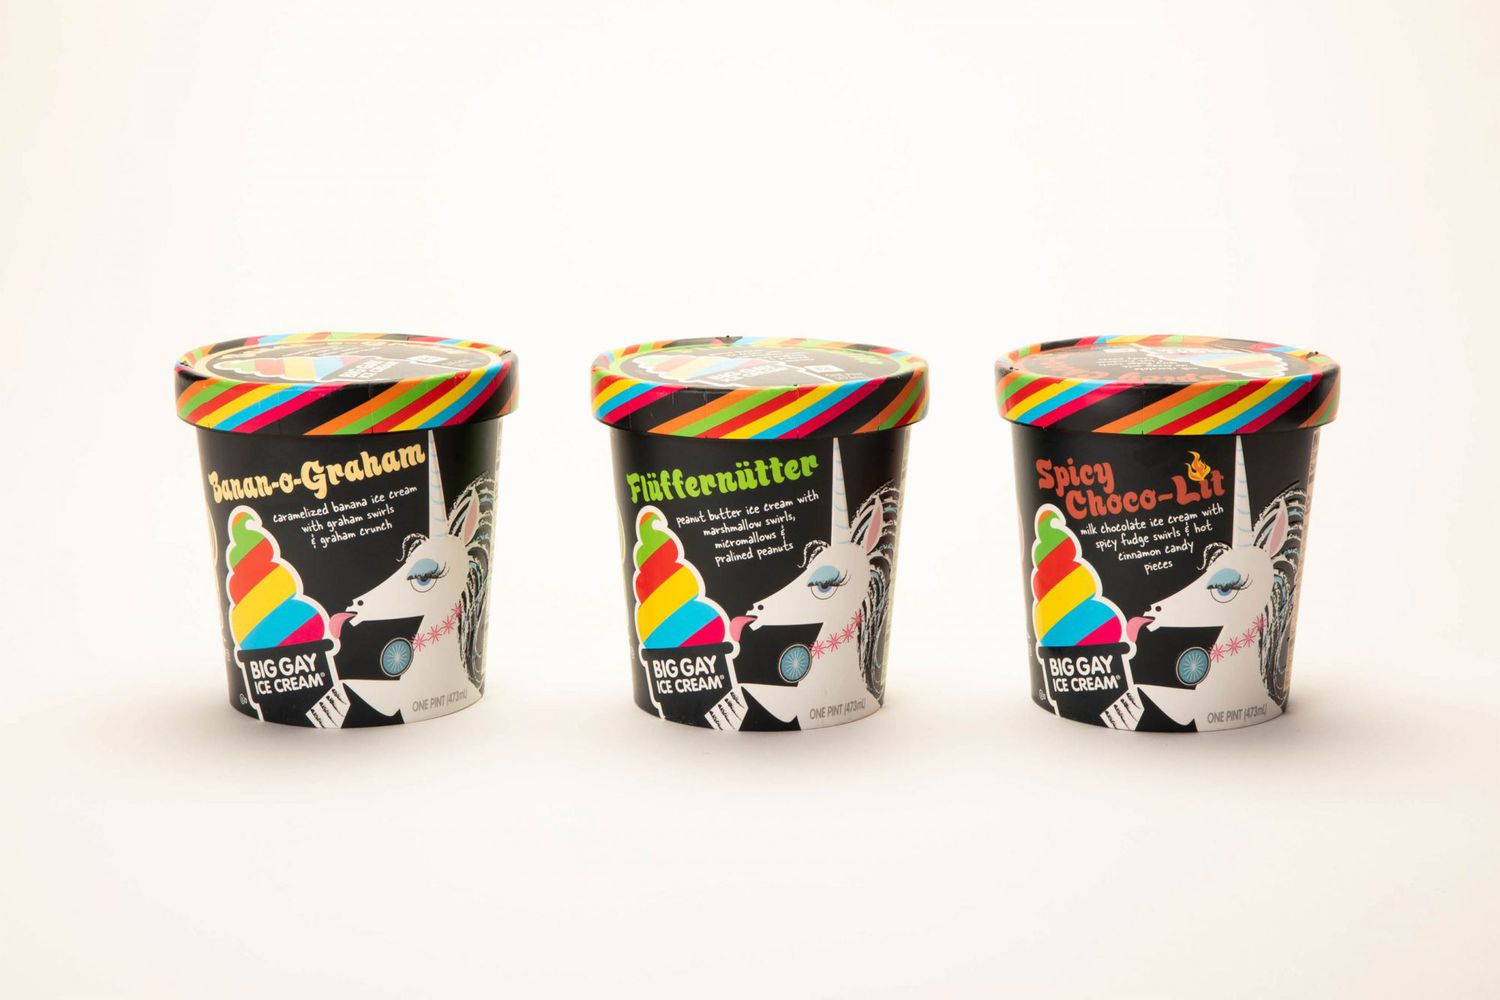 3 new flavors of Big Gay Ice Cream